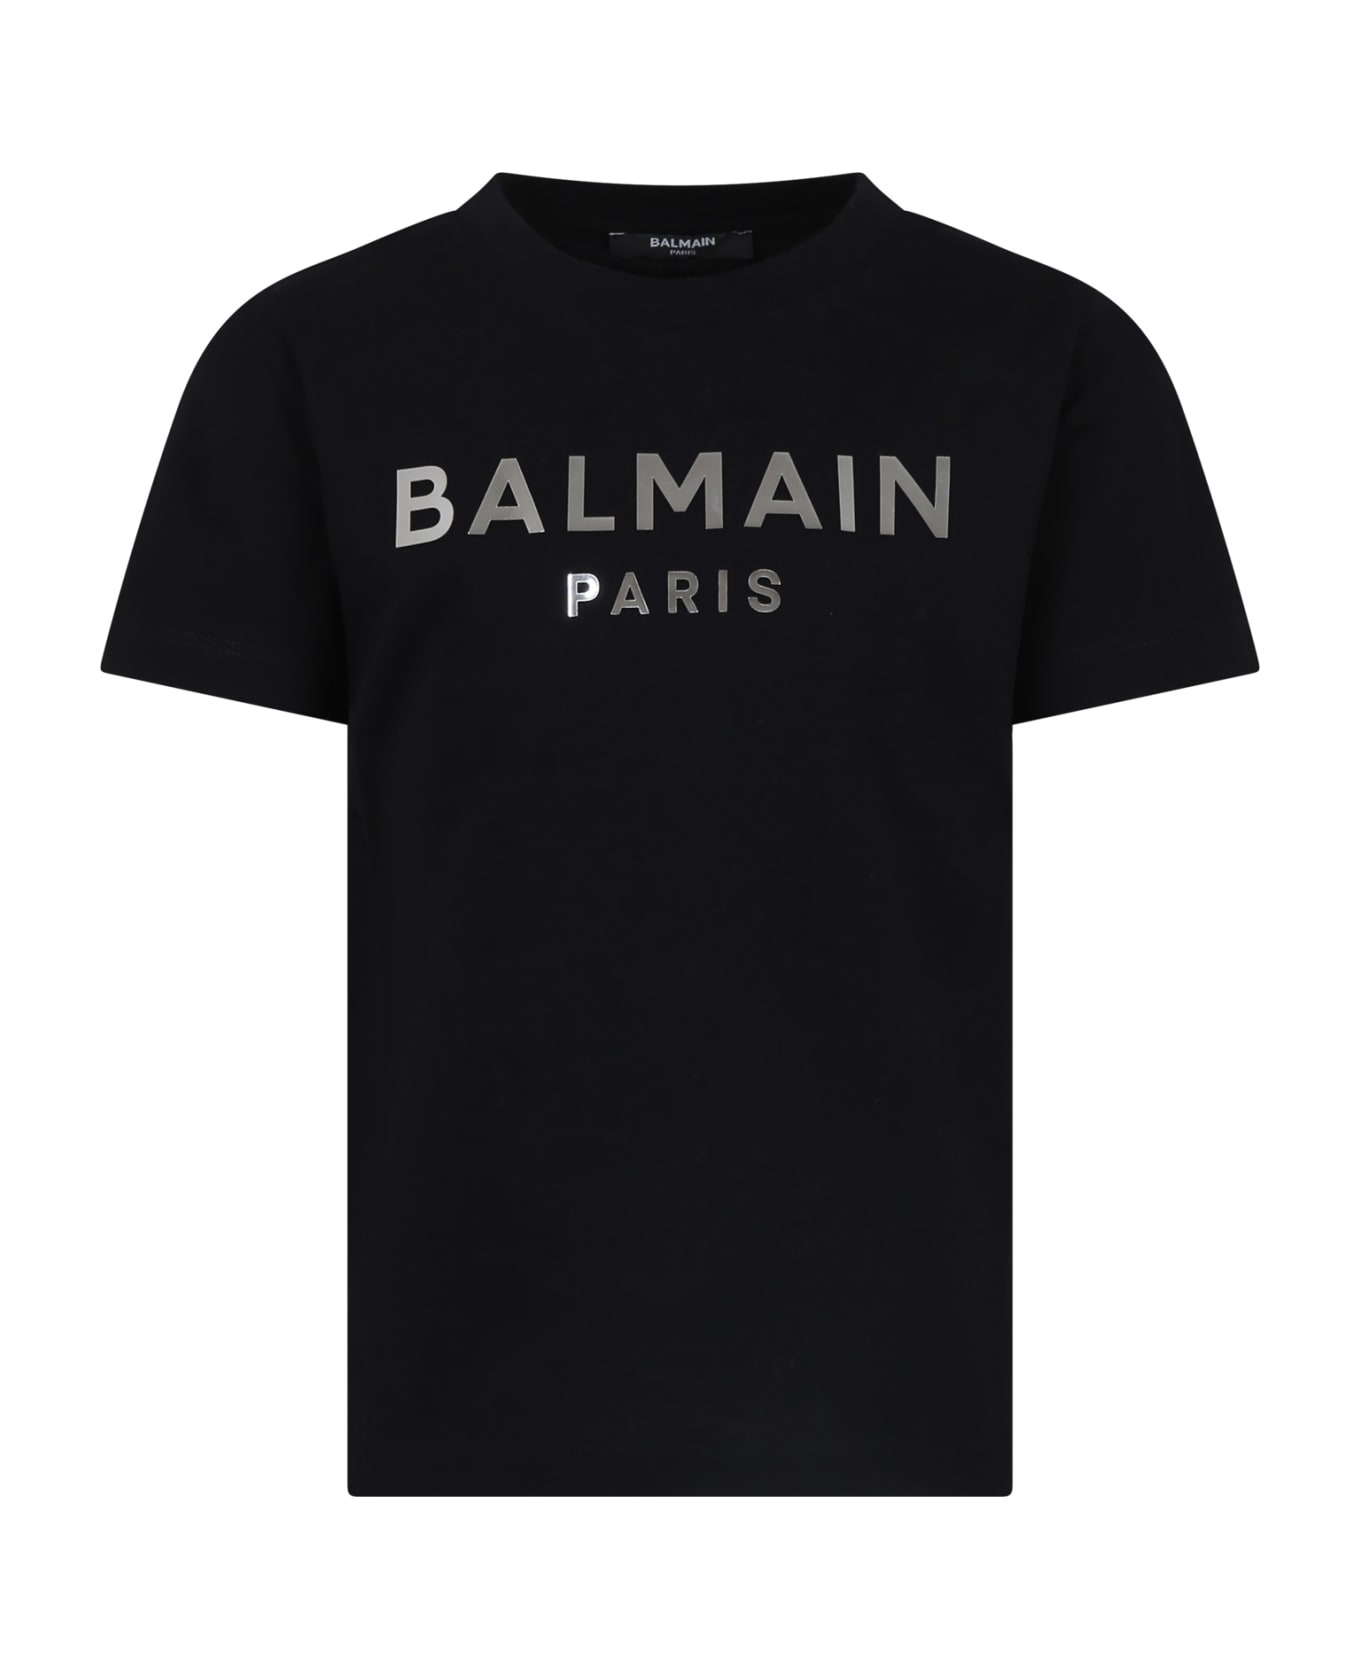 Balmain Black T-shirt For Kids With White Logo - Black